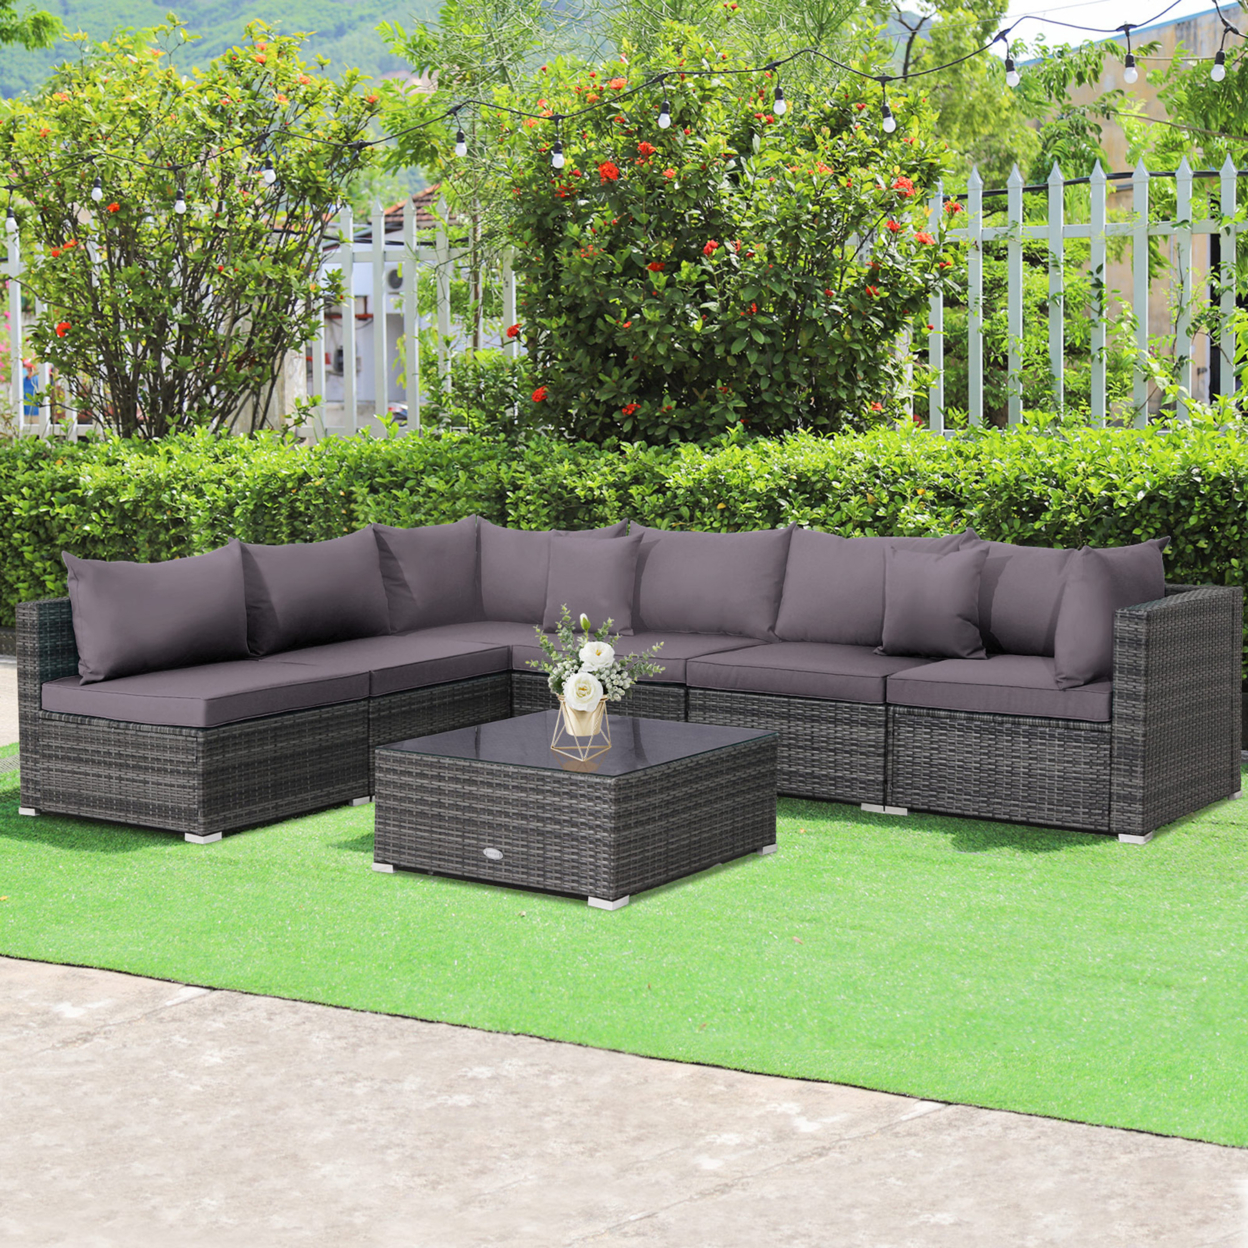 7PCS Patio Rattan Sectional Sofa Set Outdoor Furniture Set W/ Cushions - Off White